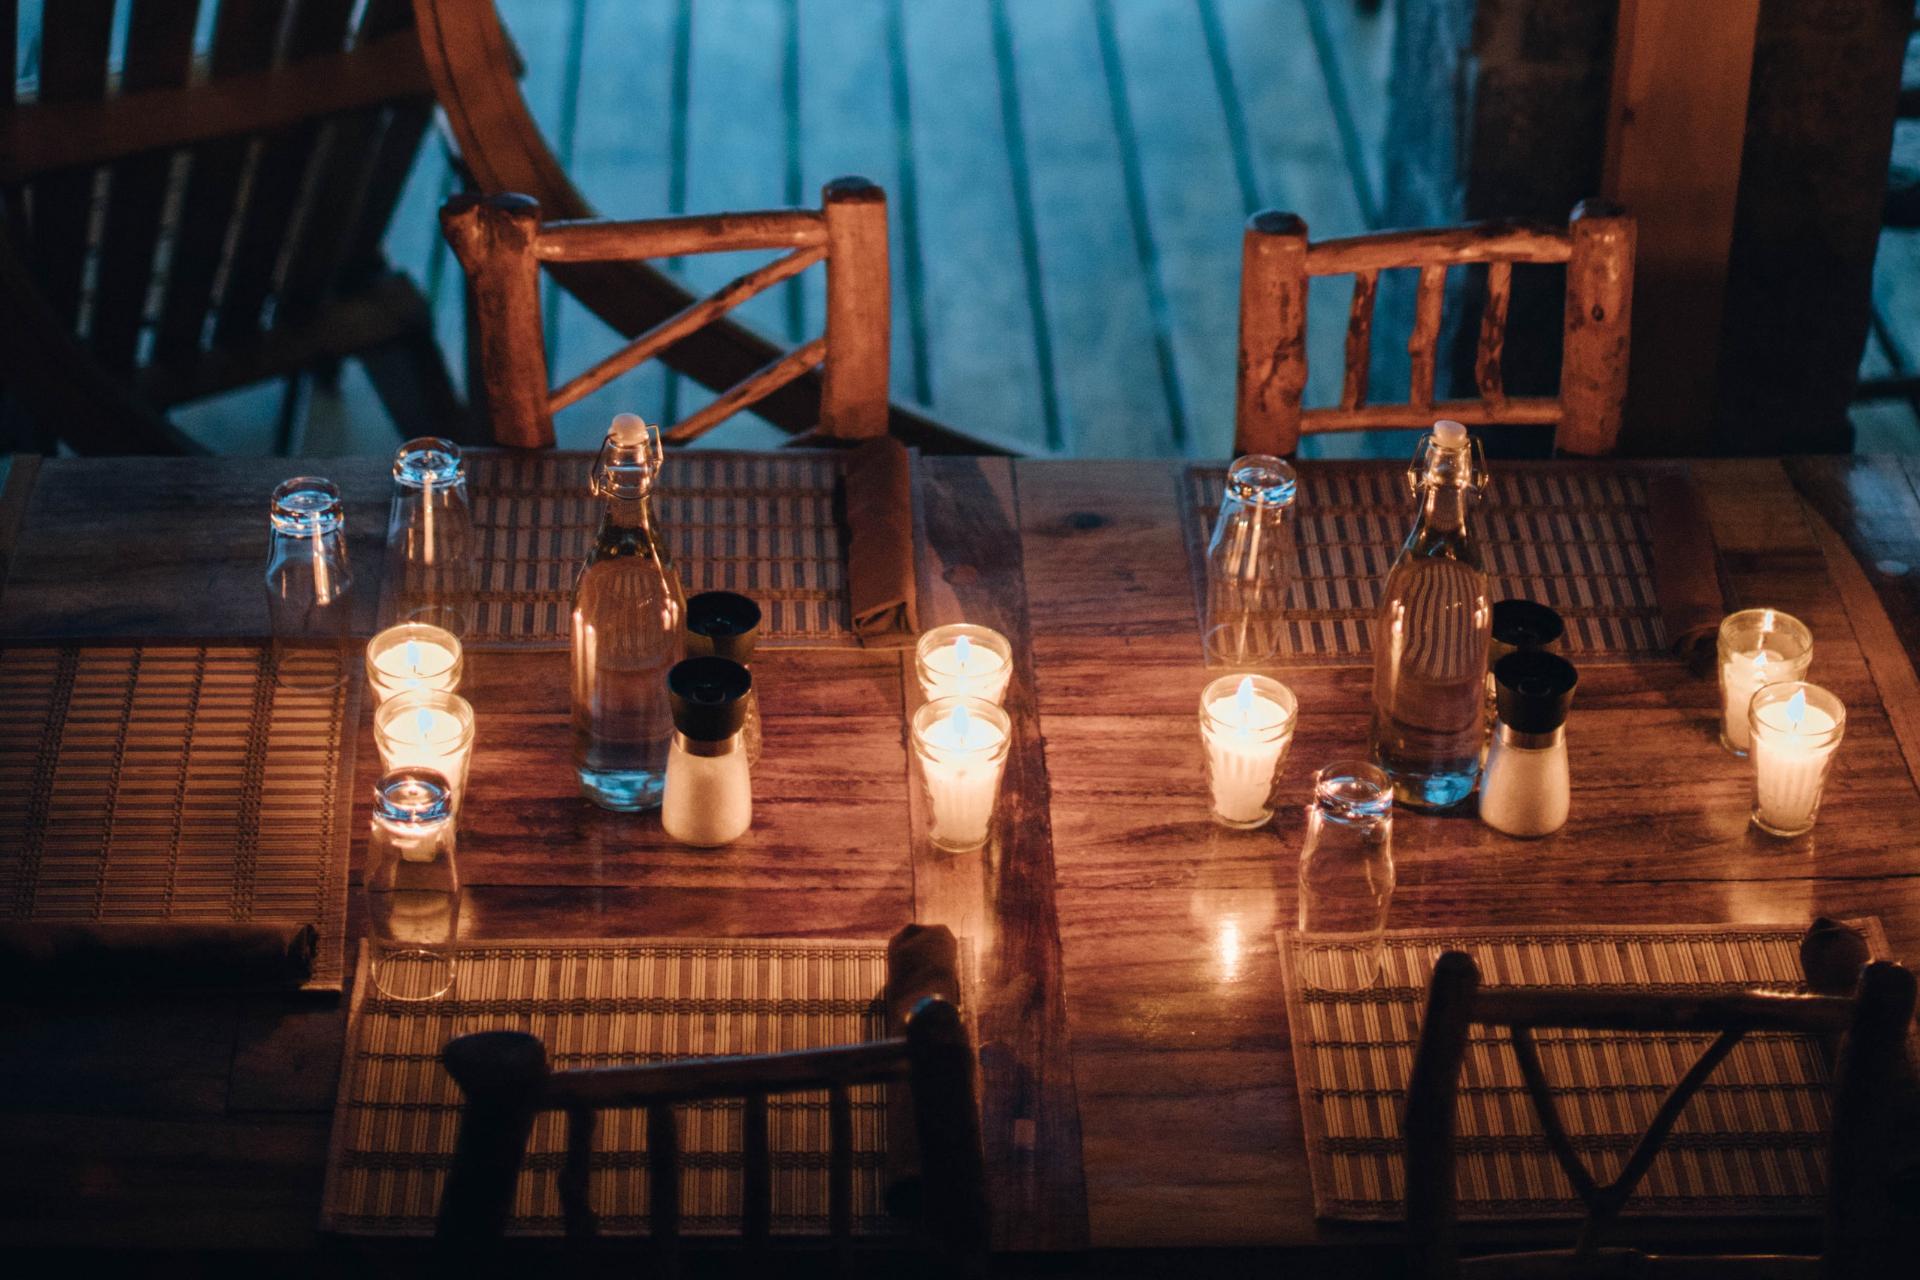 cena romantica a la luz de velas